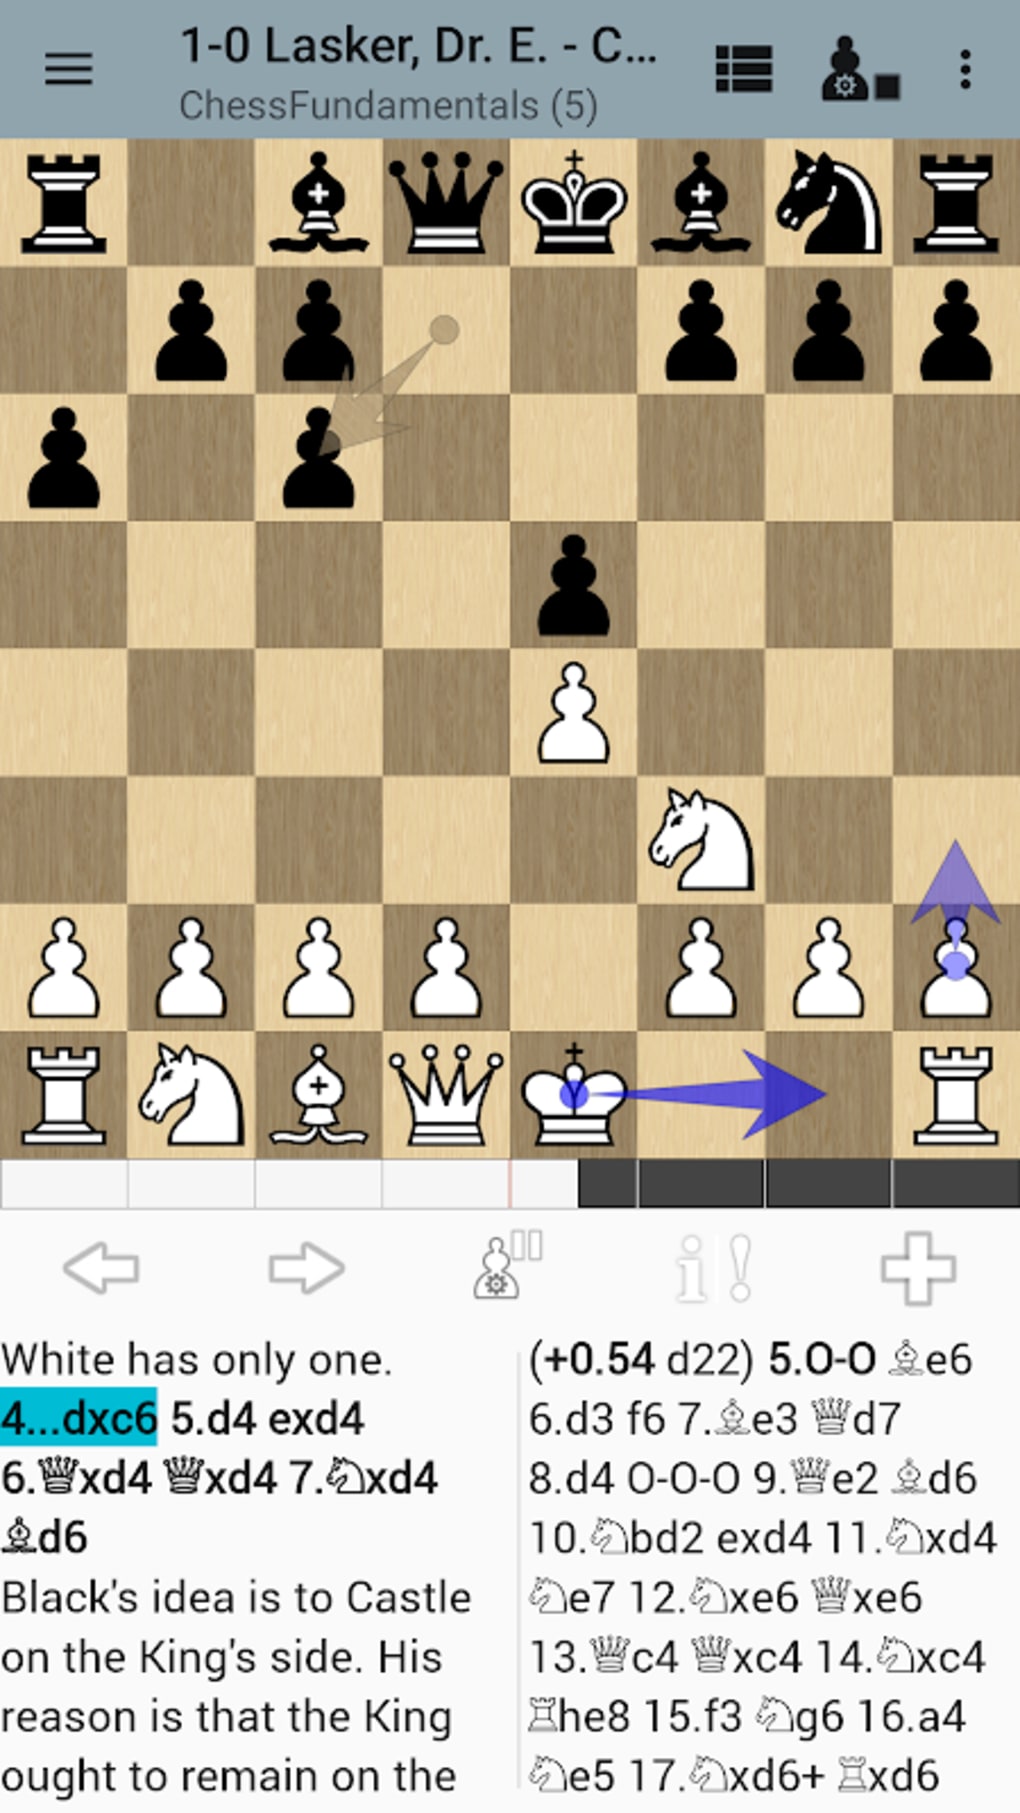 Download do APK de Stockfish Chess Engine para Android